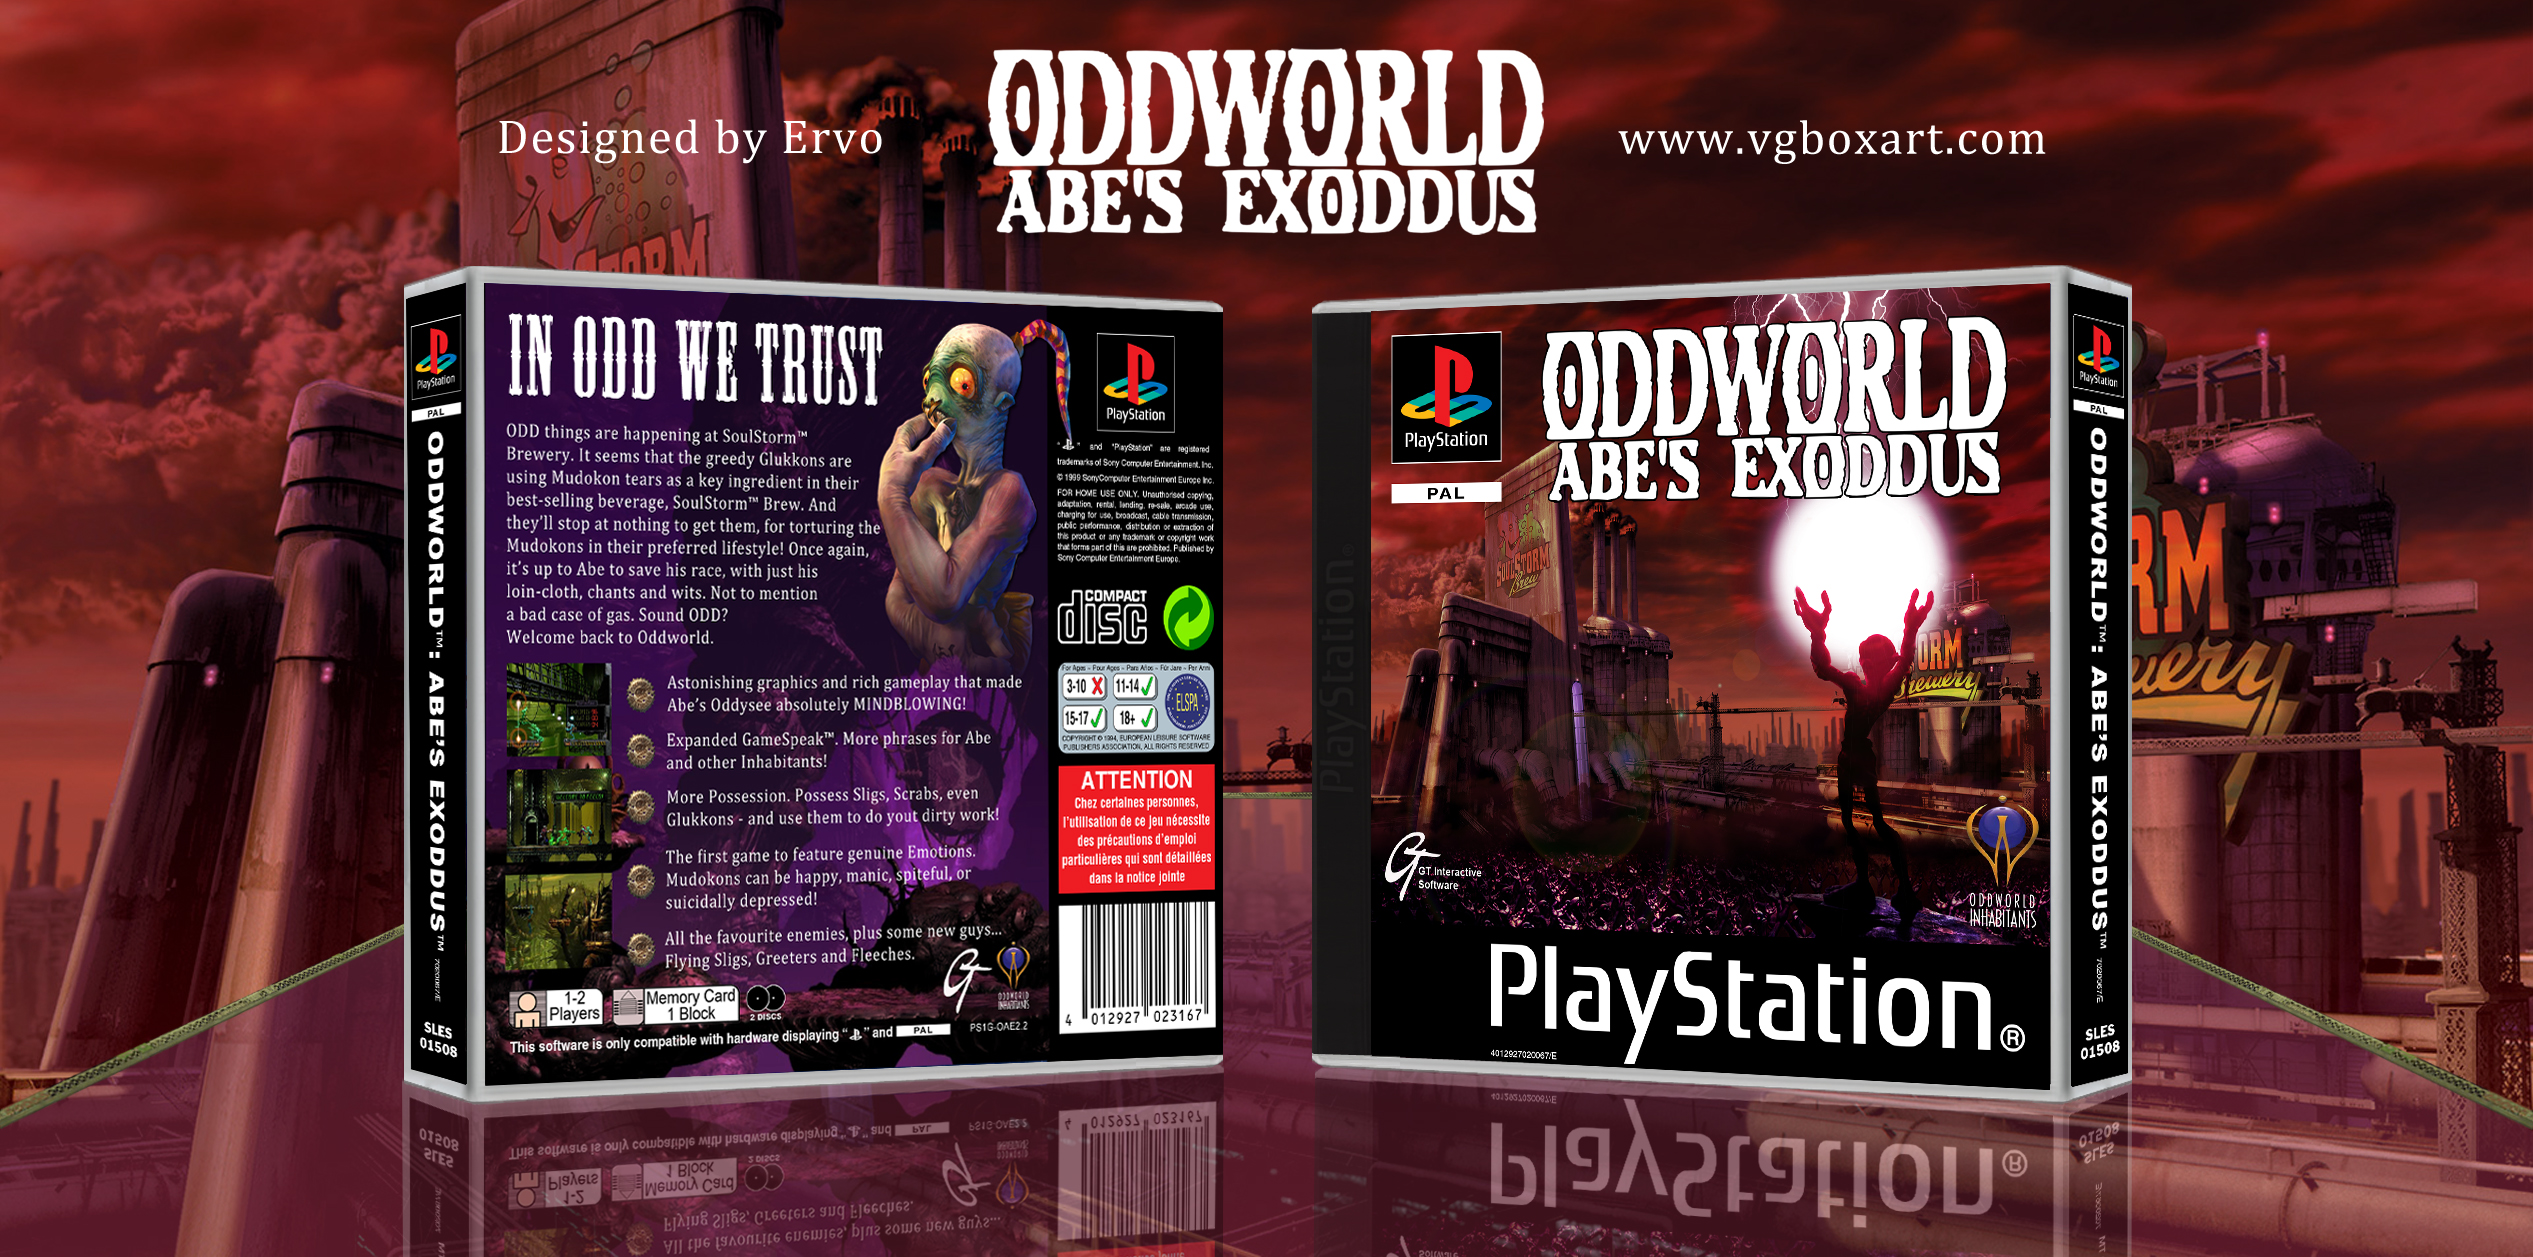 Oddworld Abe's Exoddus box cover